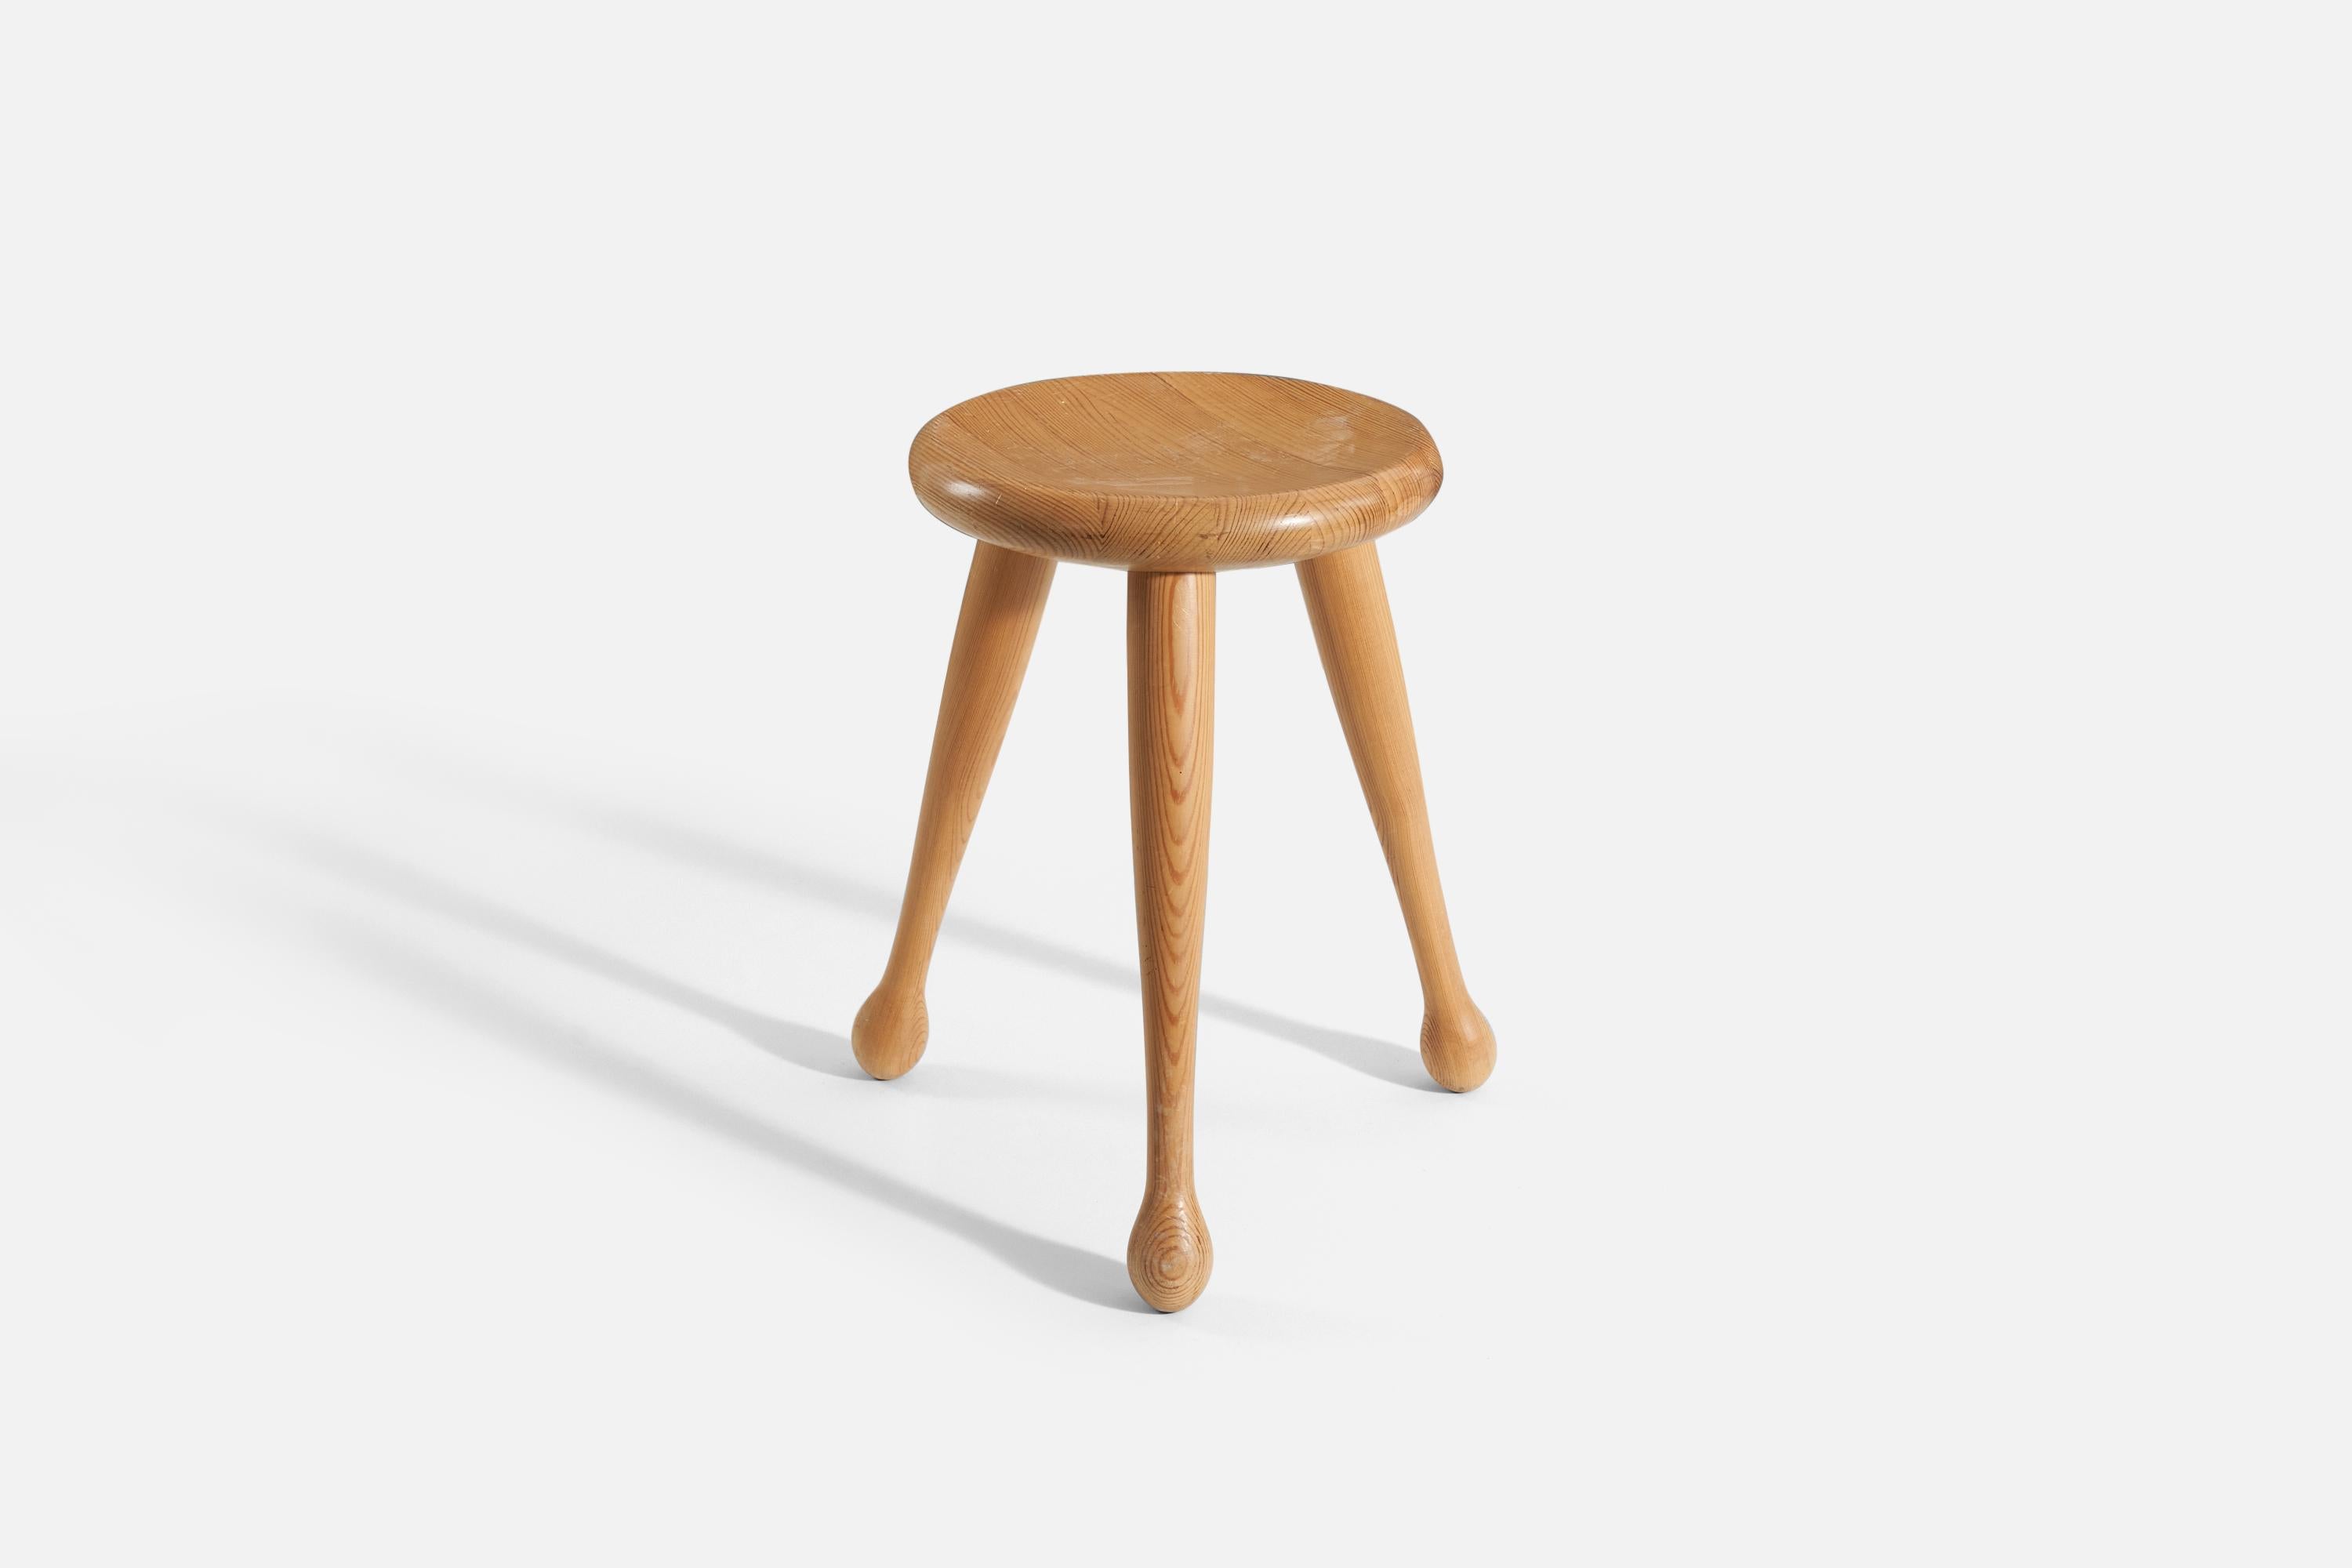 A pine stool produced by Möbelkompaniet Ahl & Wahlén, Sweden, 1960s.